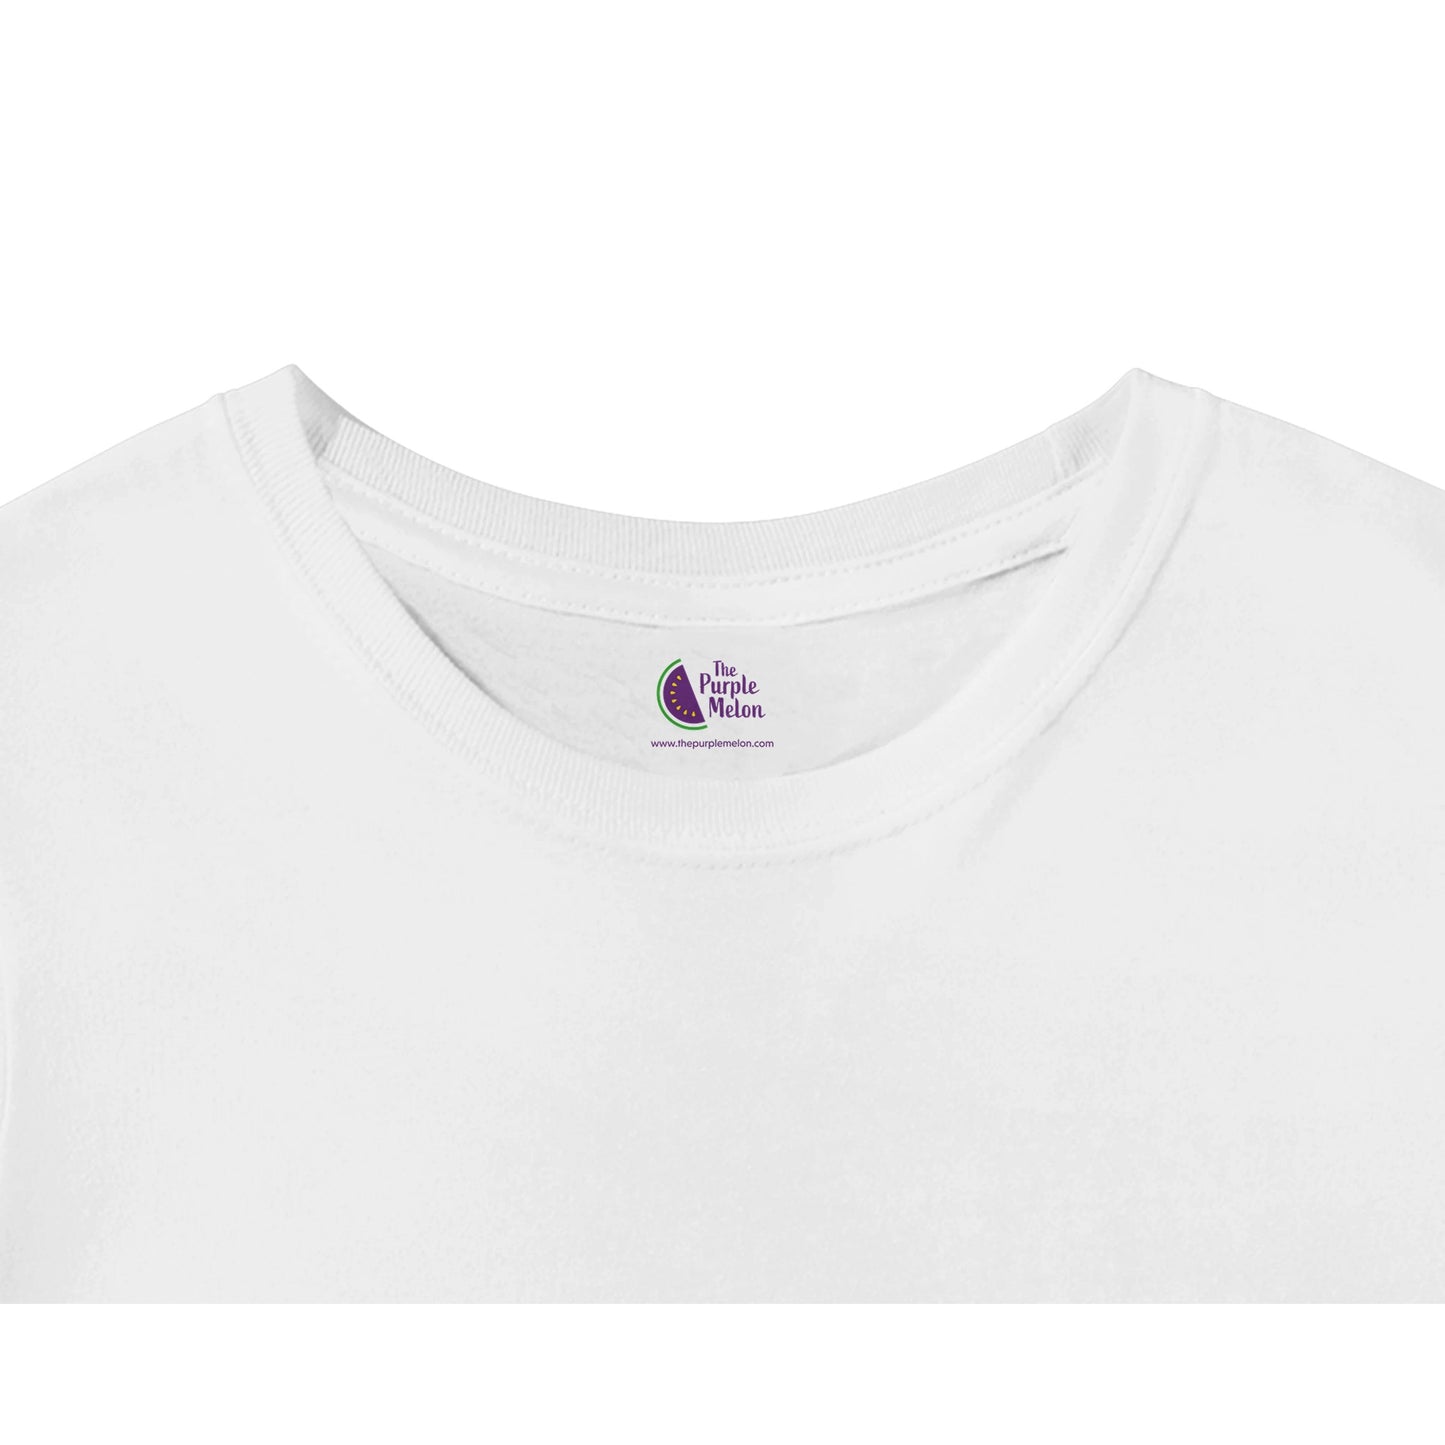 white t-shirt neck label with the purple melon logo